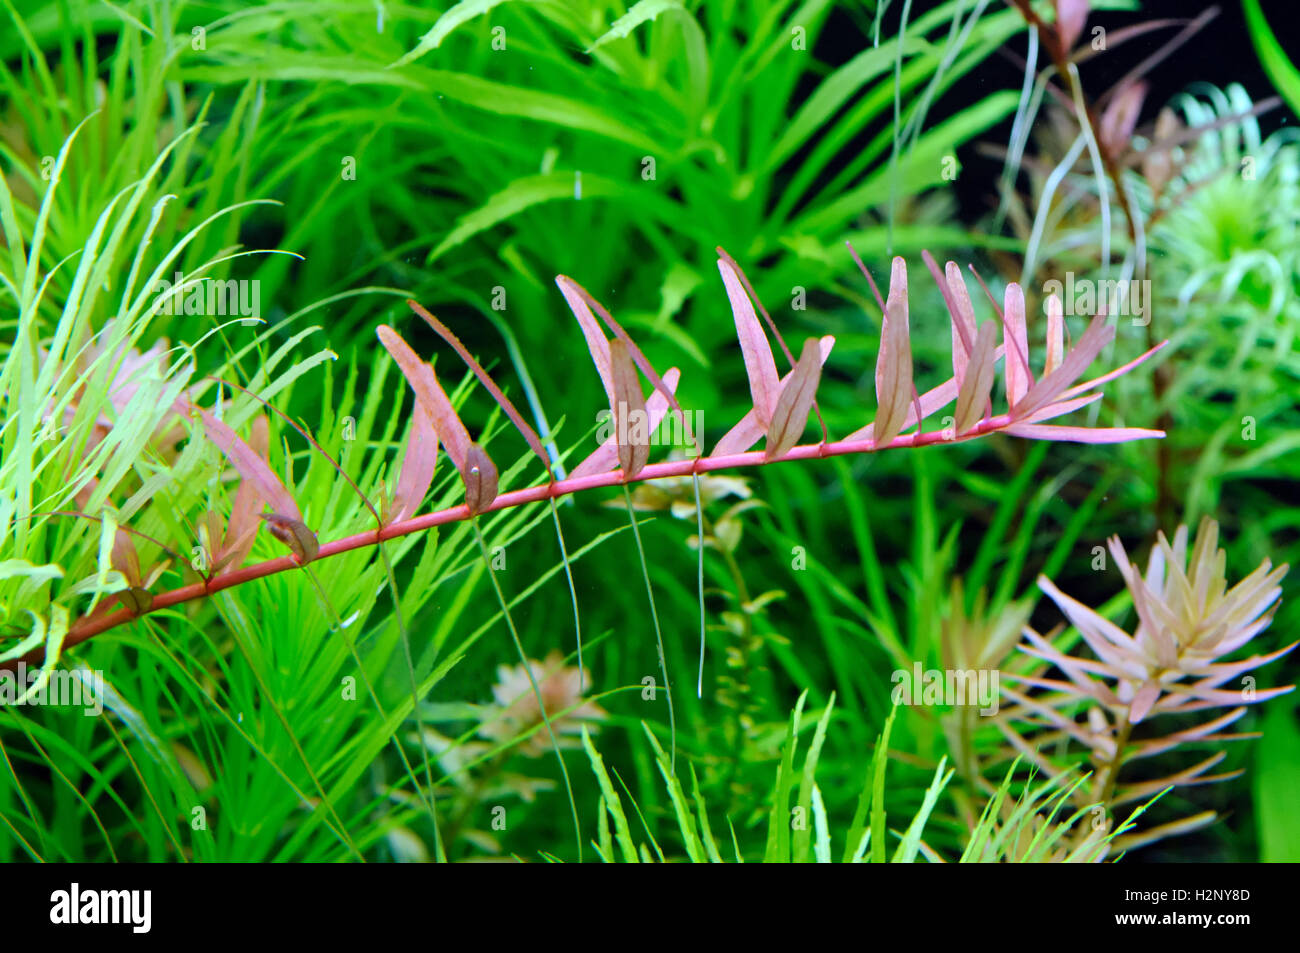 Lush aquarium plants with Rotala colorata in front. Stock Photo